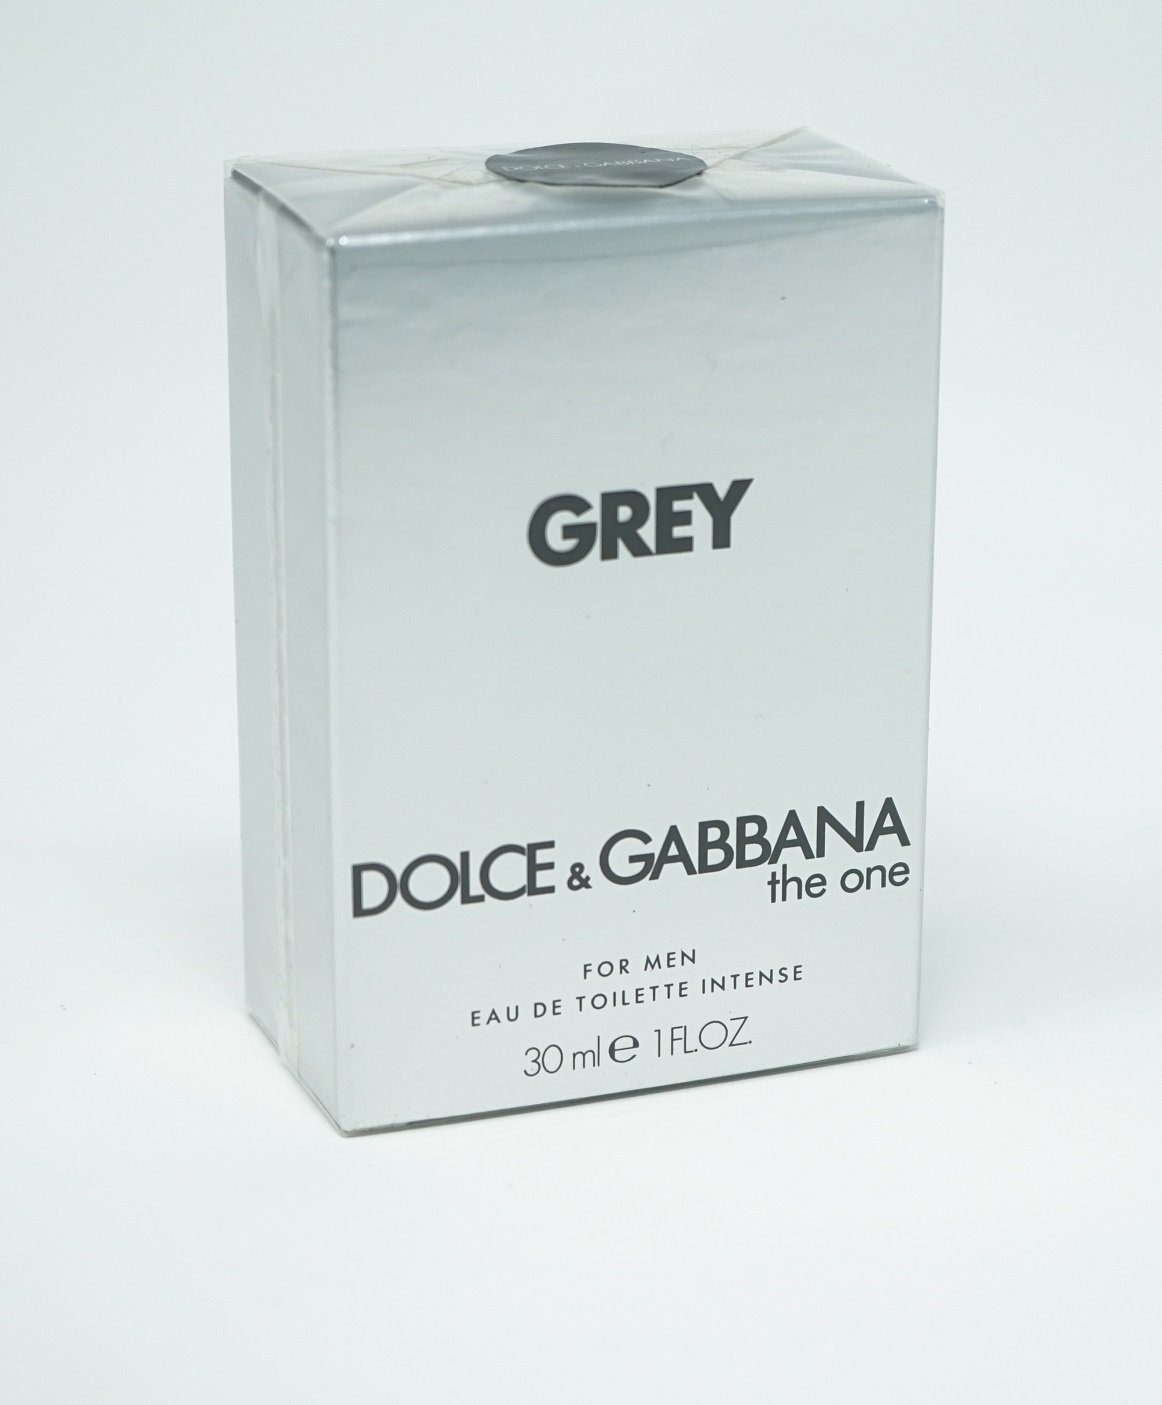 Toilette Dolce GABBANA 30ml Toilette de & & Gabbana Eau One Grey DOLCE Eau Intense de The